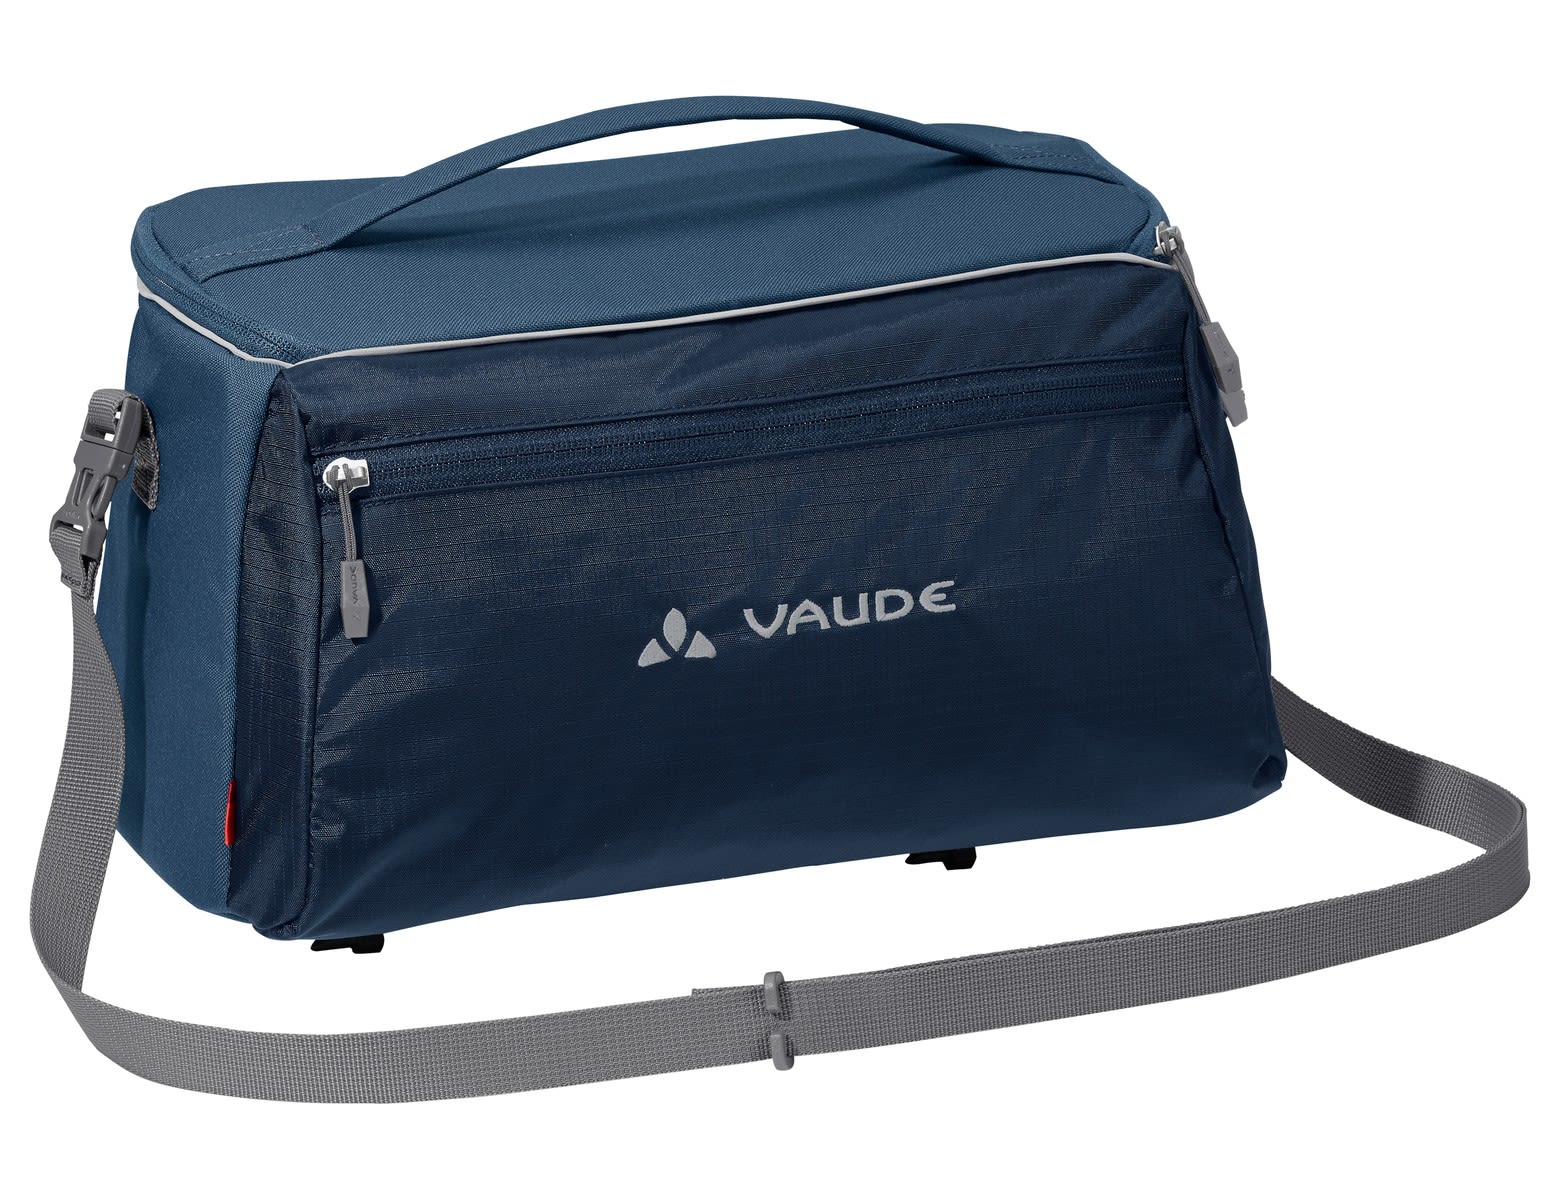 Vaude Road Master Shopper Blau- Fahrradtaschen- Grsse 11l - Farbe Marine